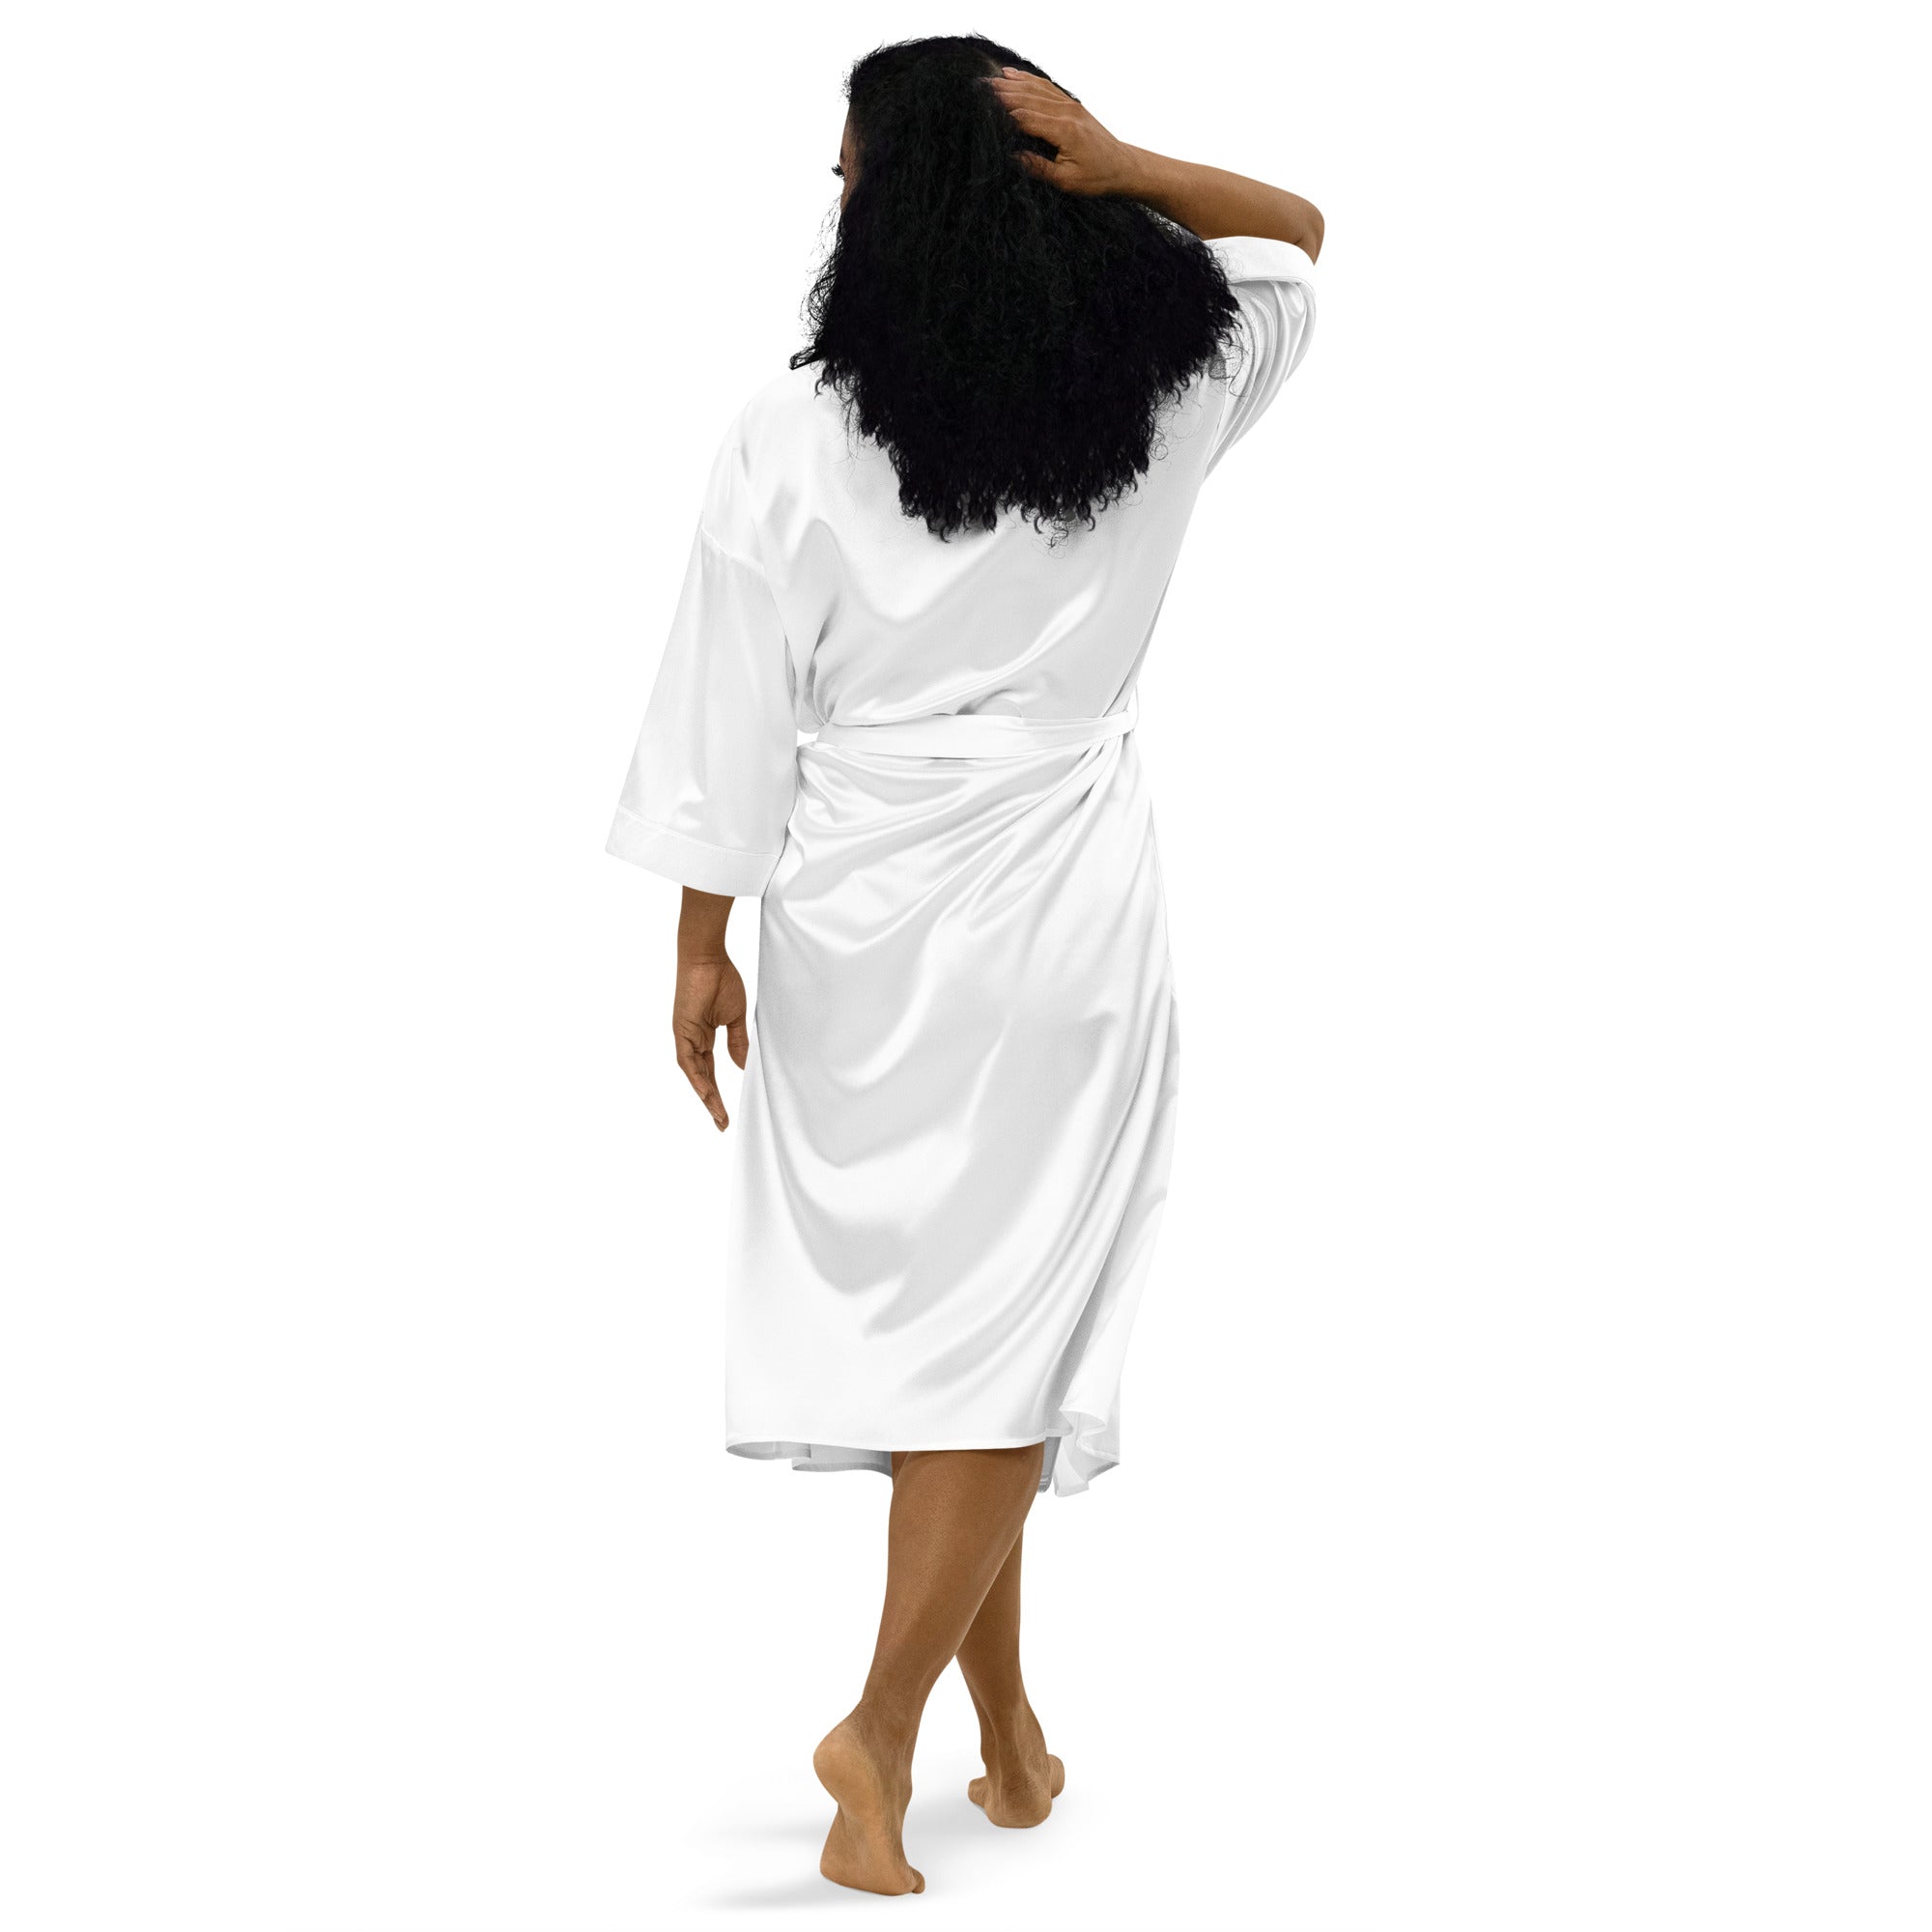 JEWESS Satin robe